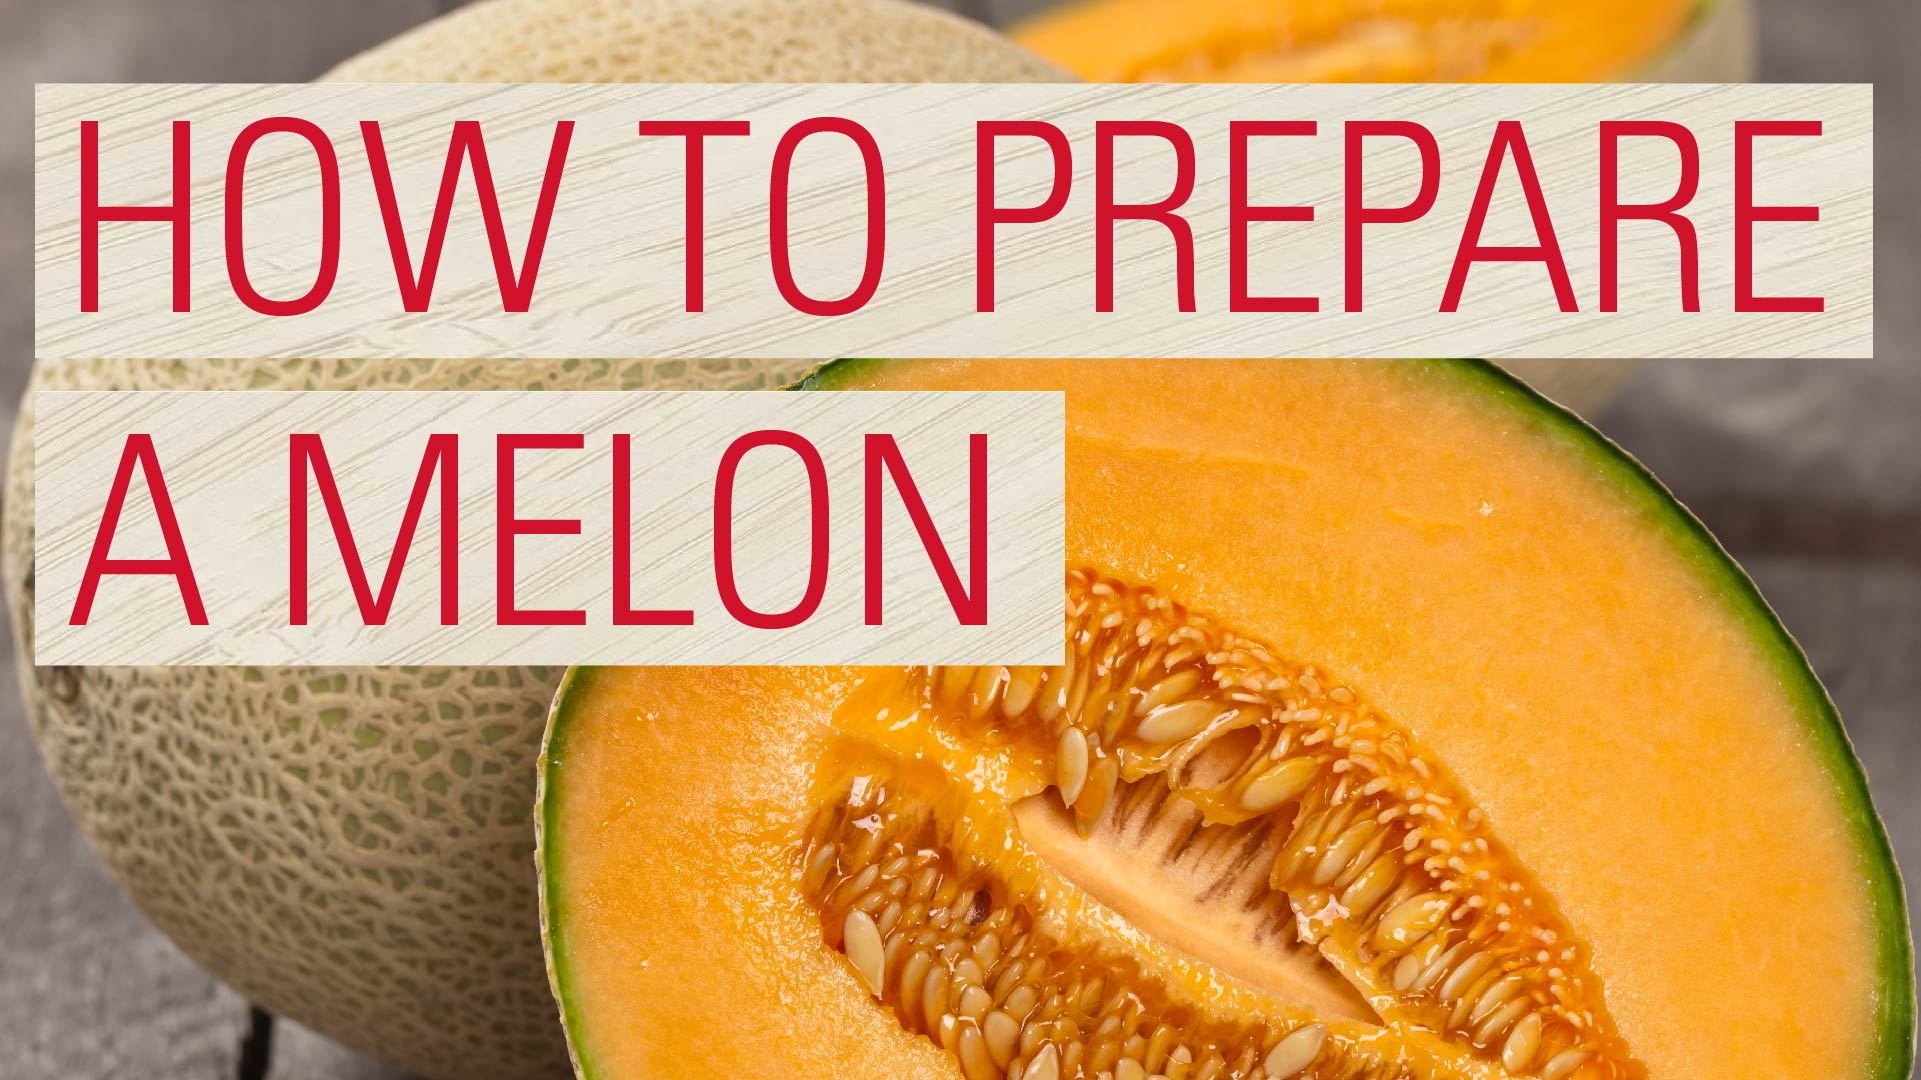 how to prepare a melon